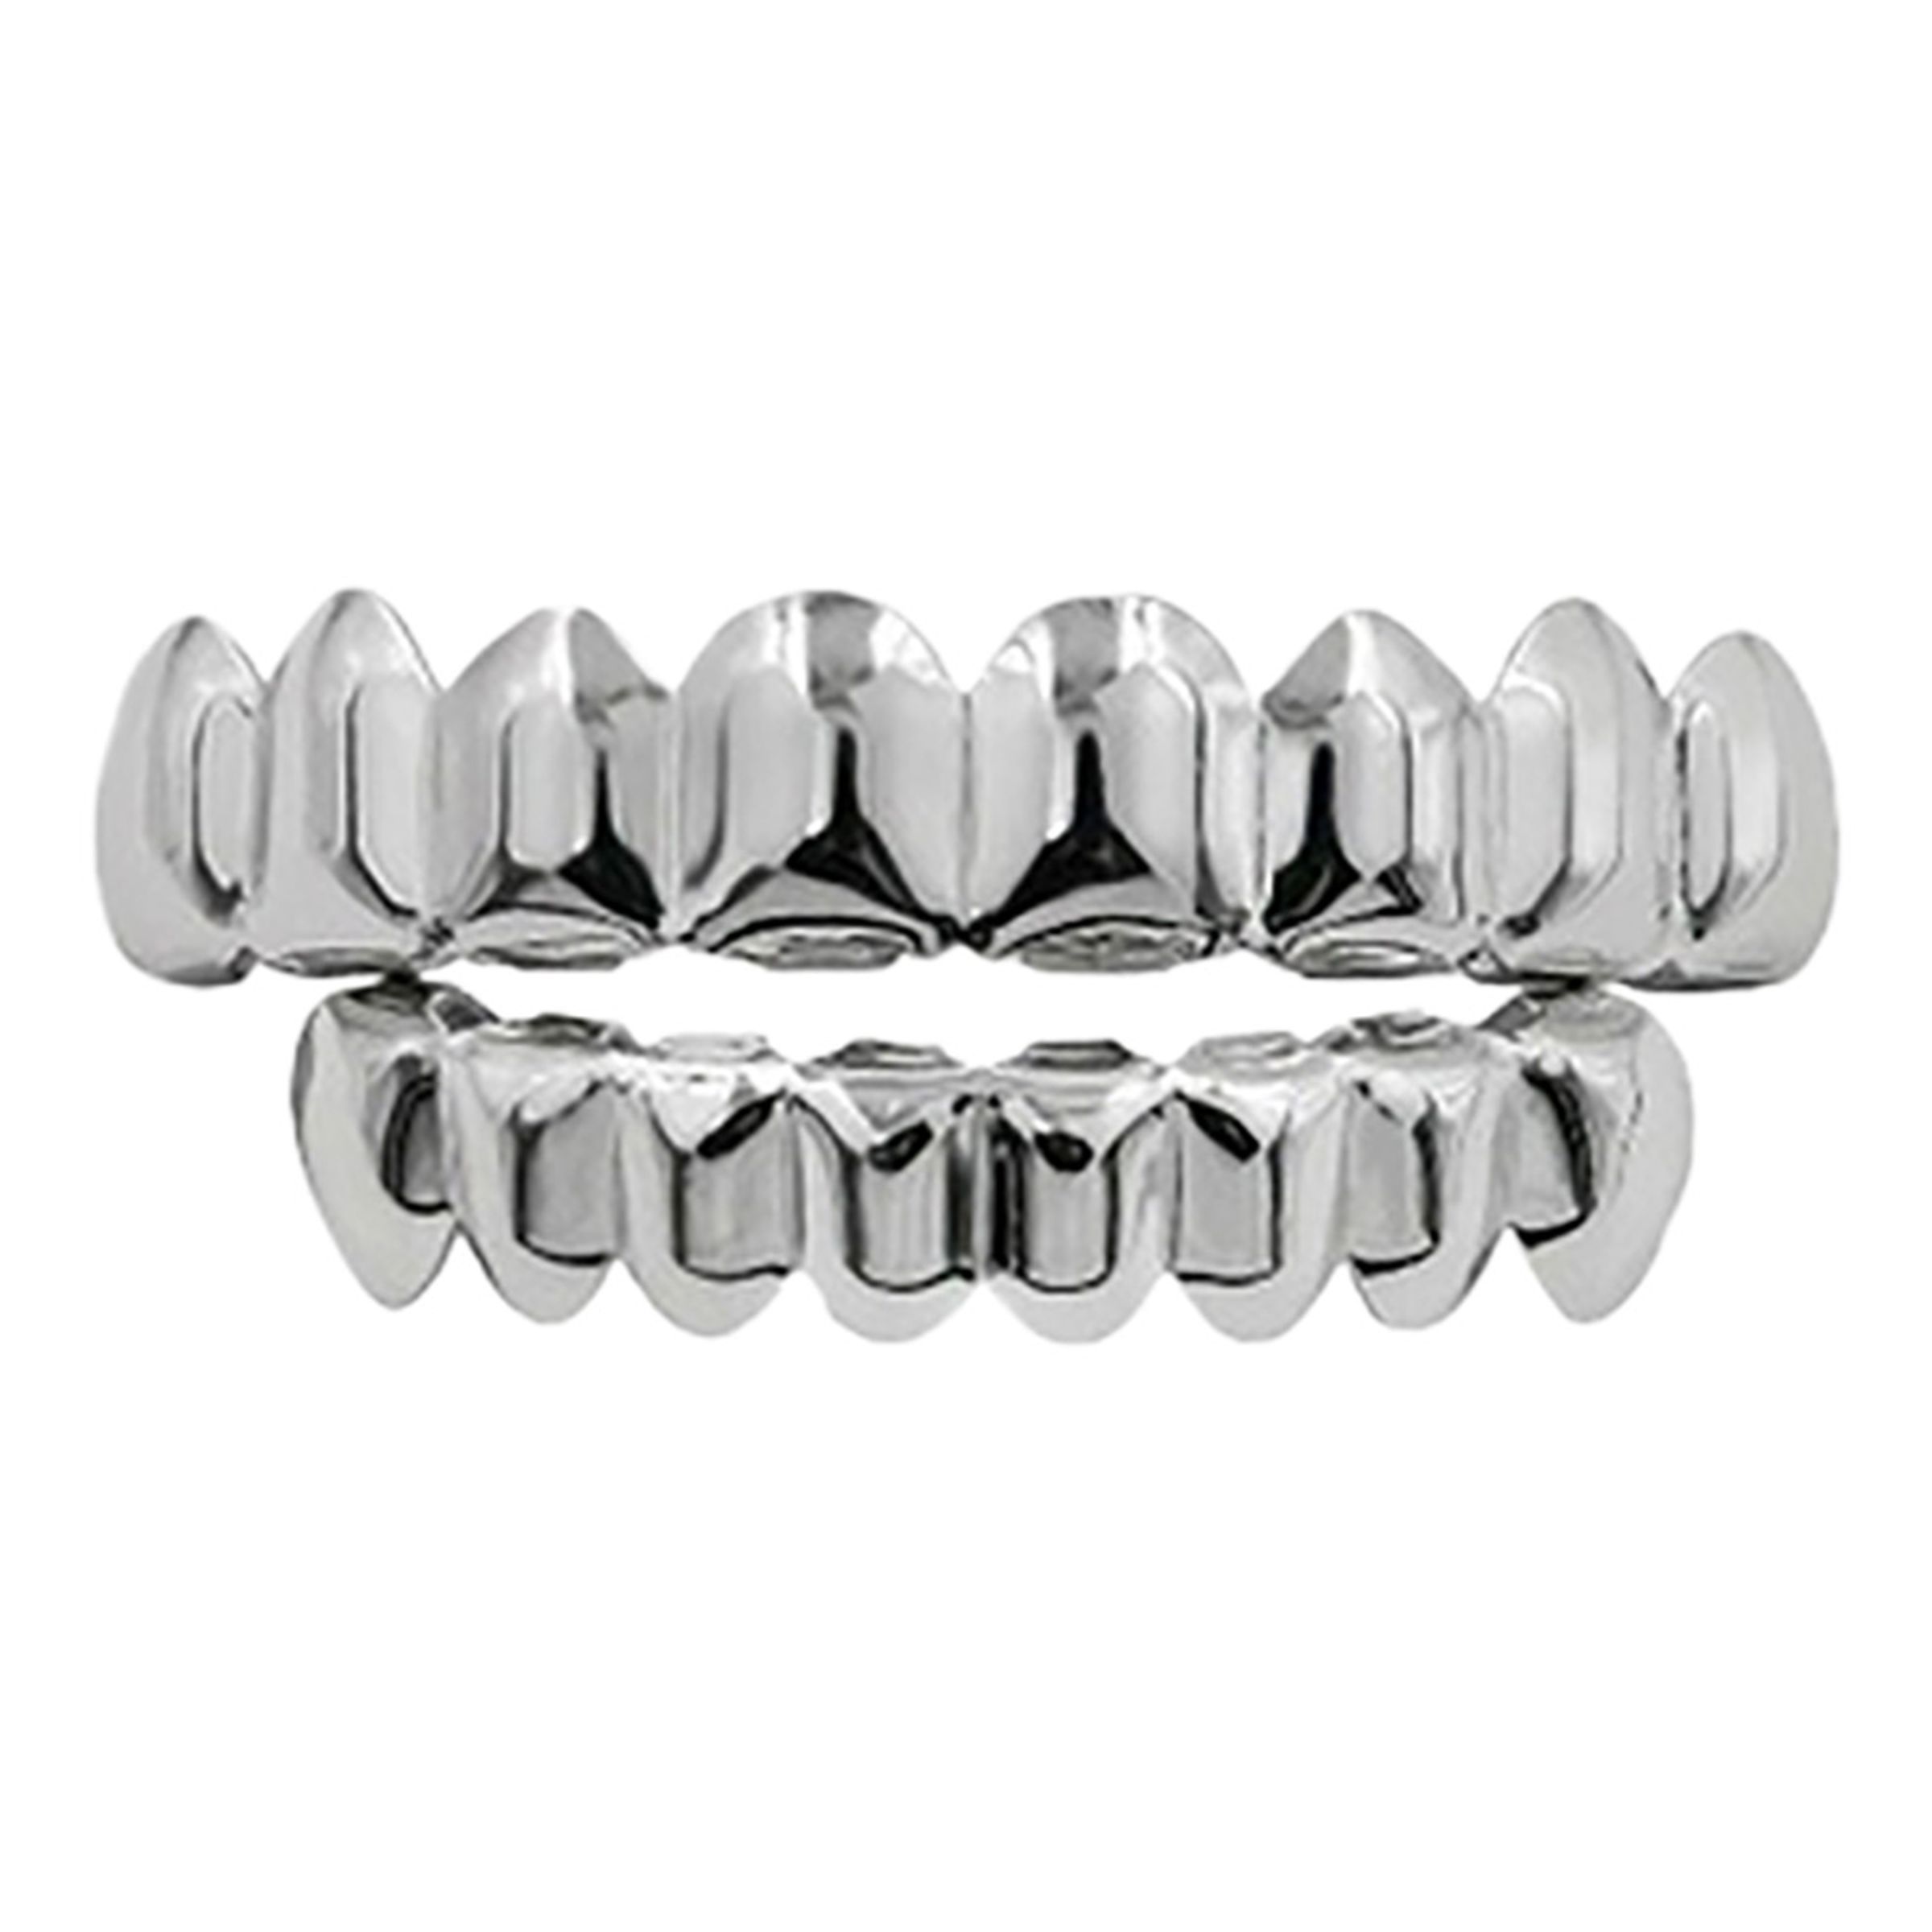 Grillz Teeth Caps - Silver